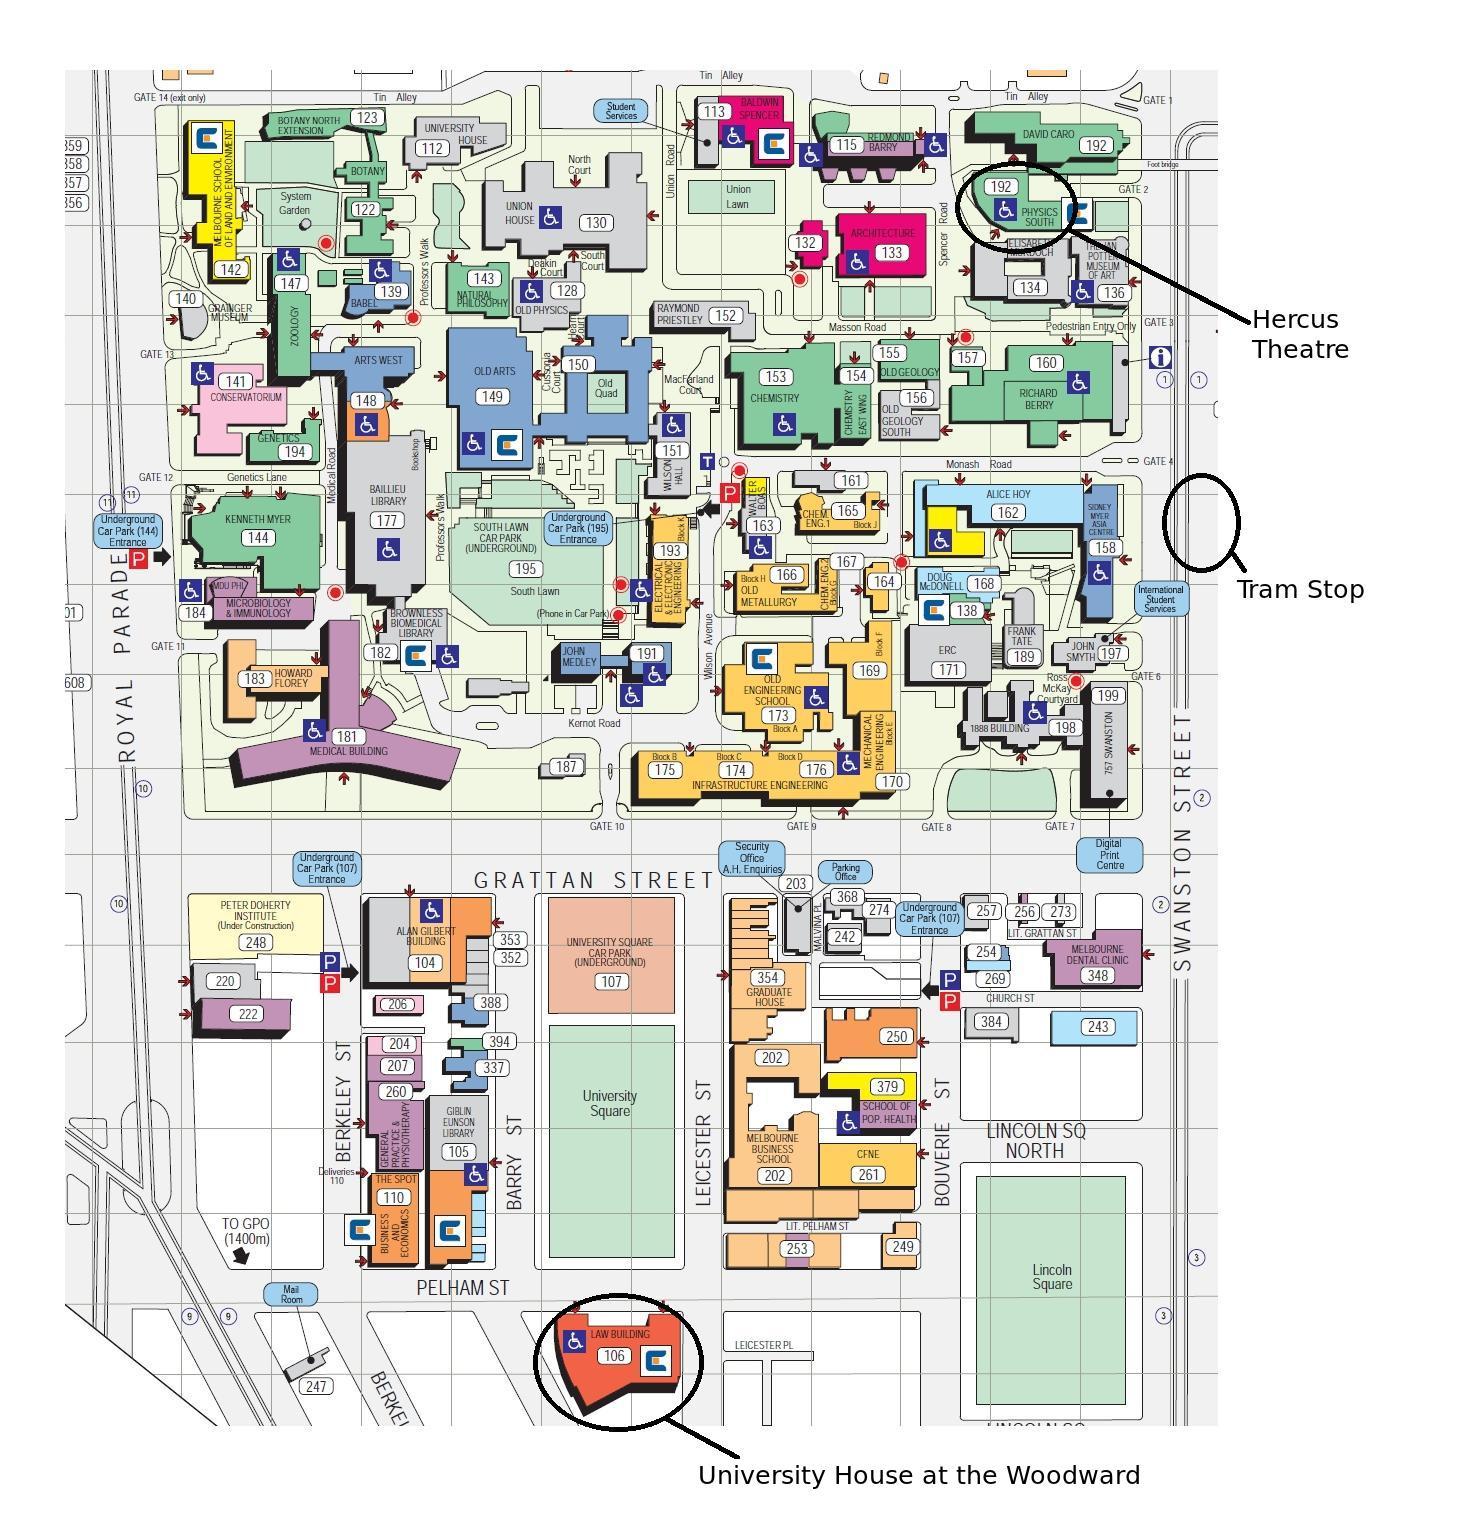 Victoria university map - Victoria university campus map (Australia)